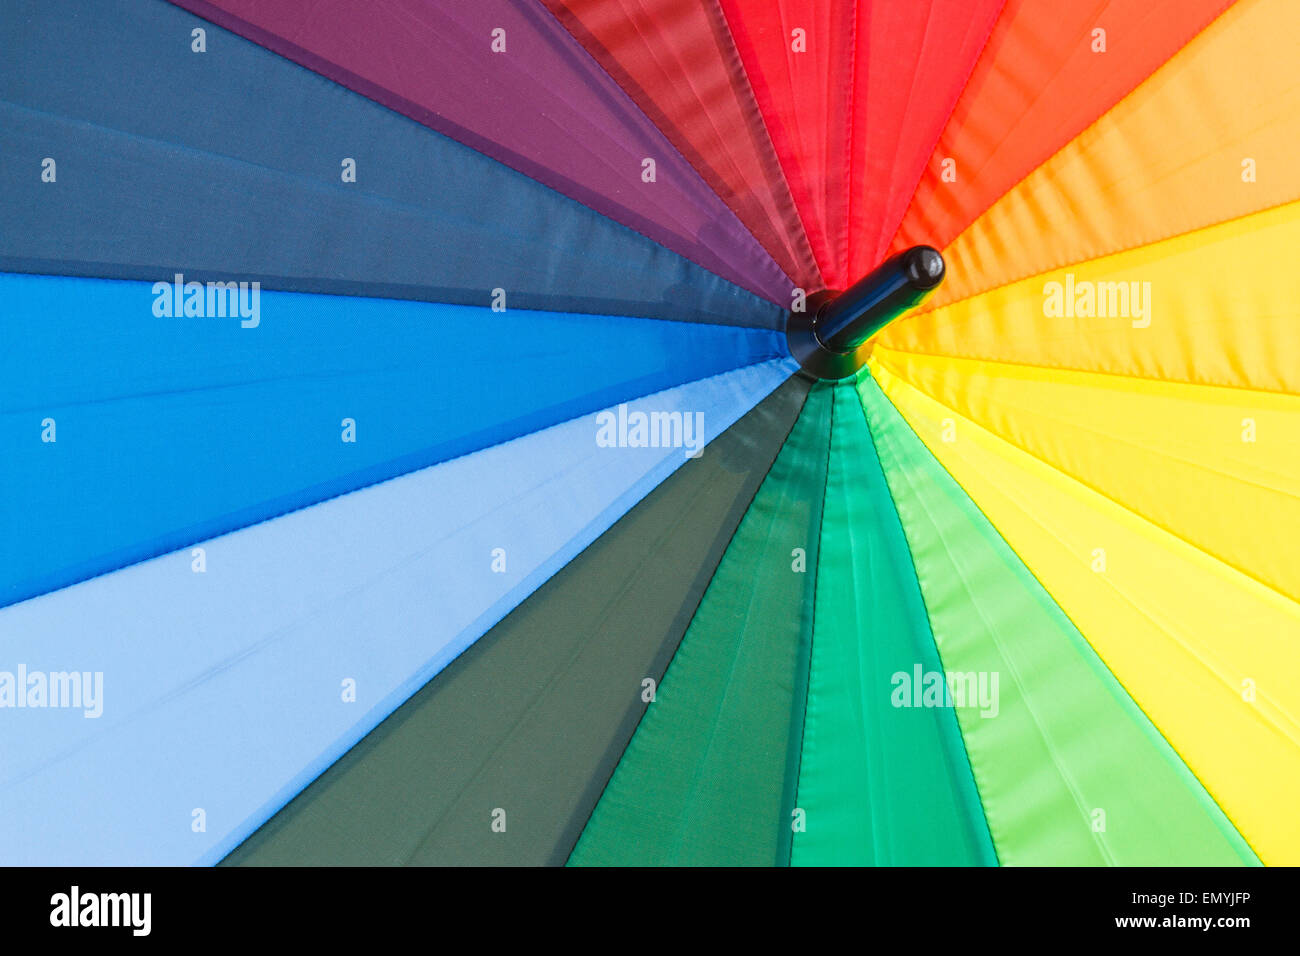 Colorful umbrella close-up Stock Photo